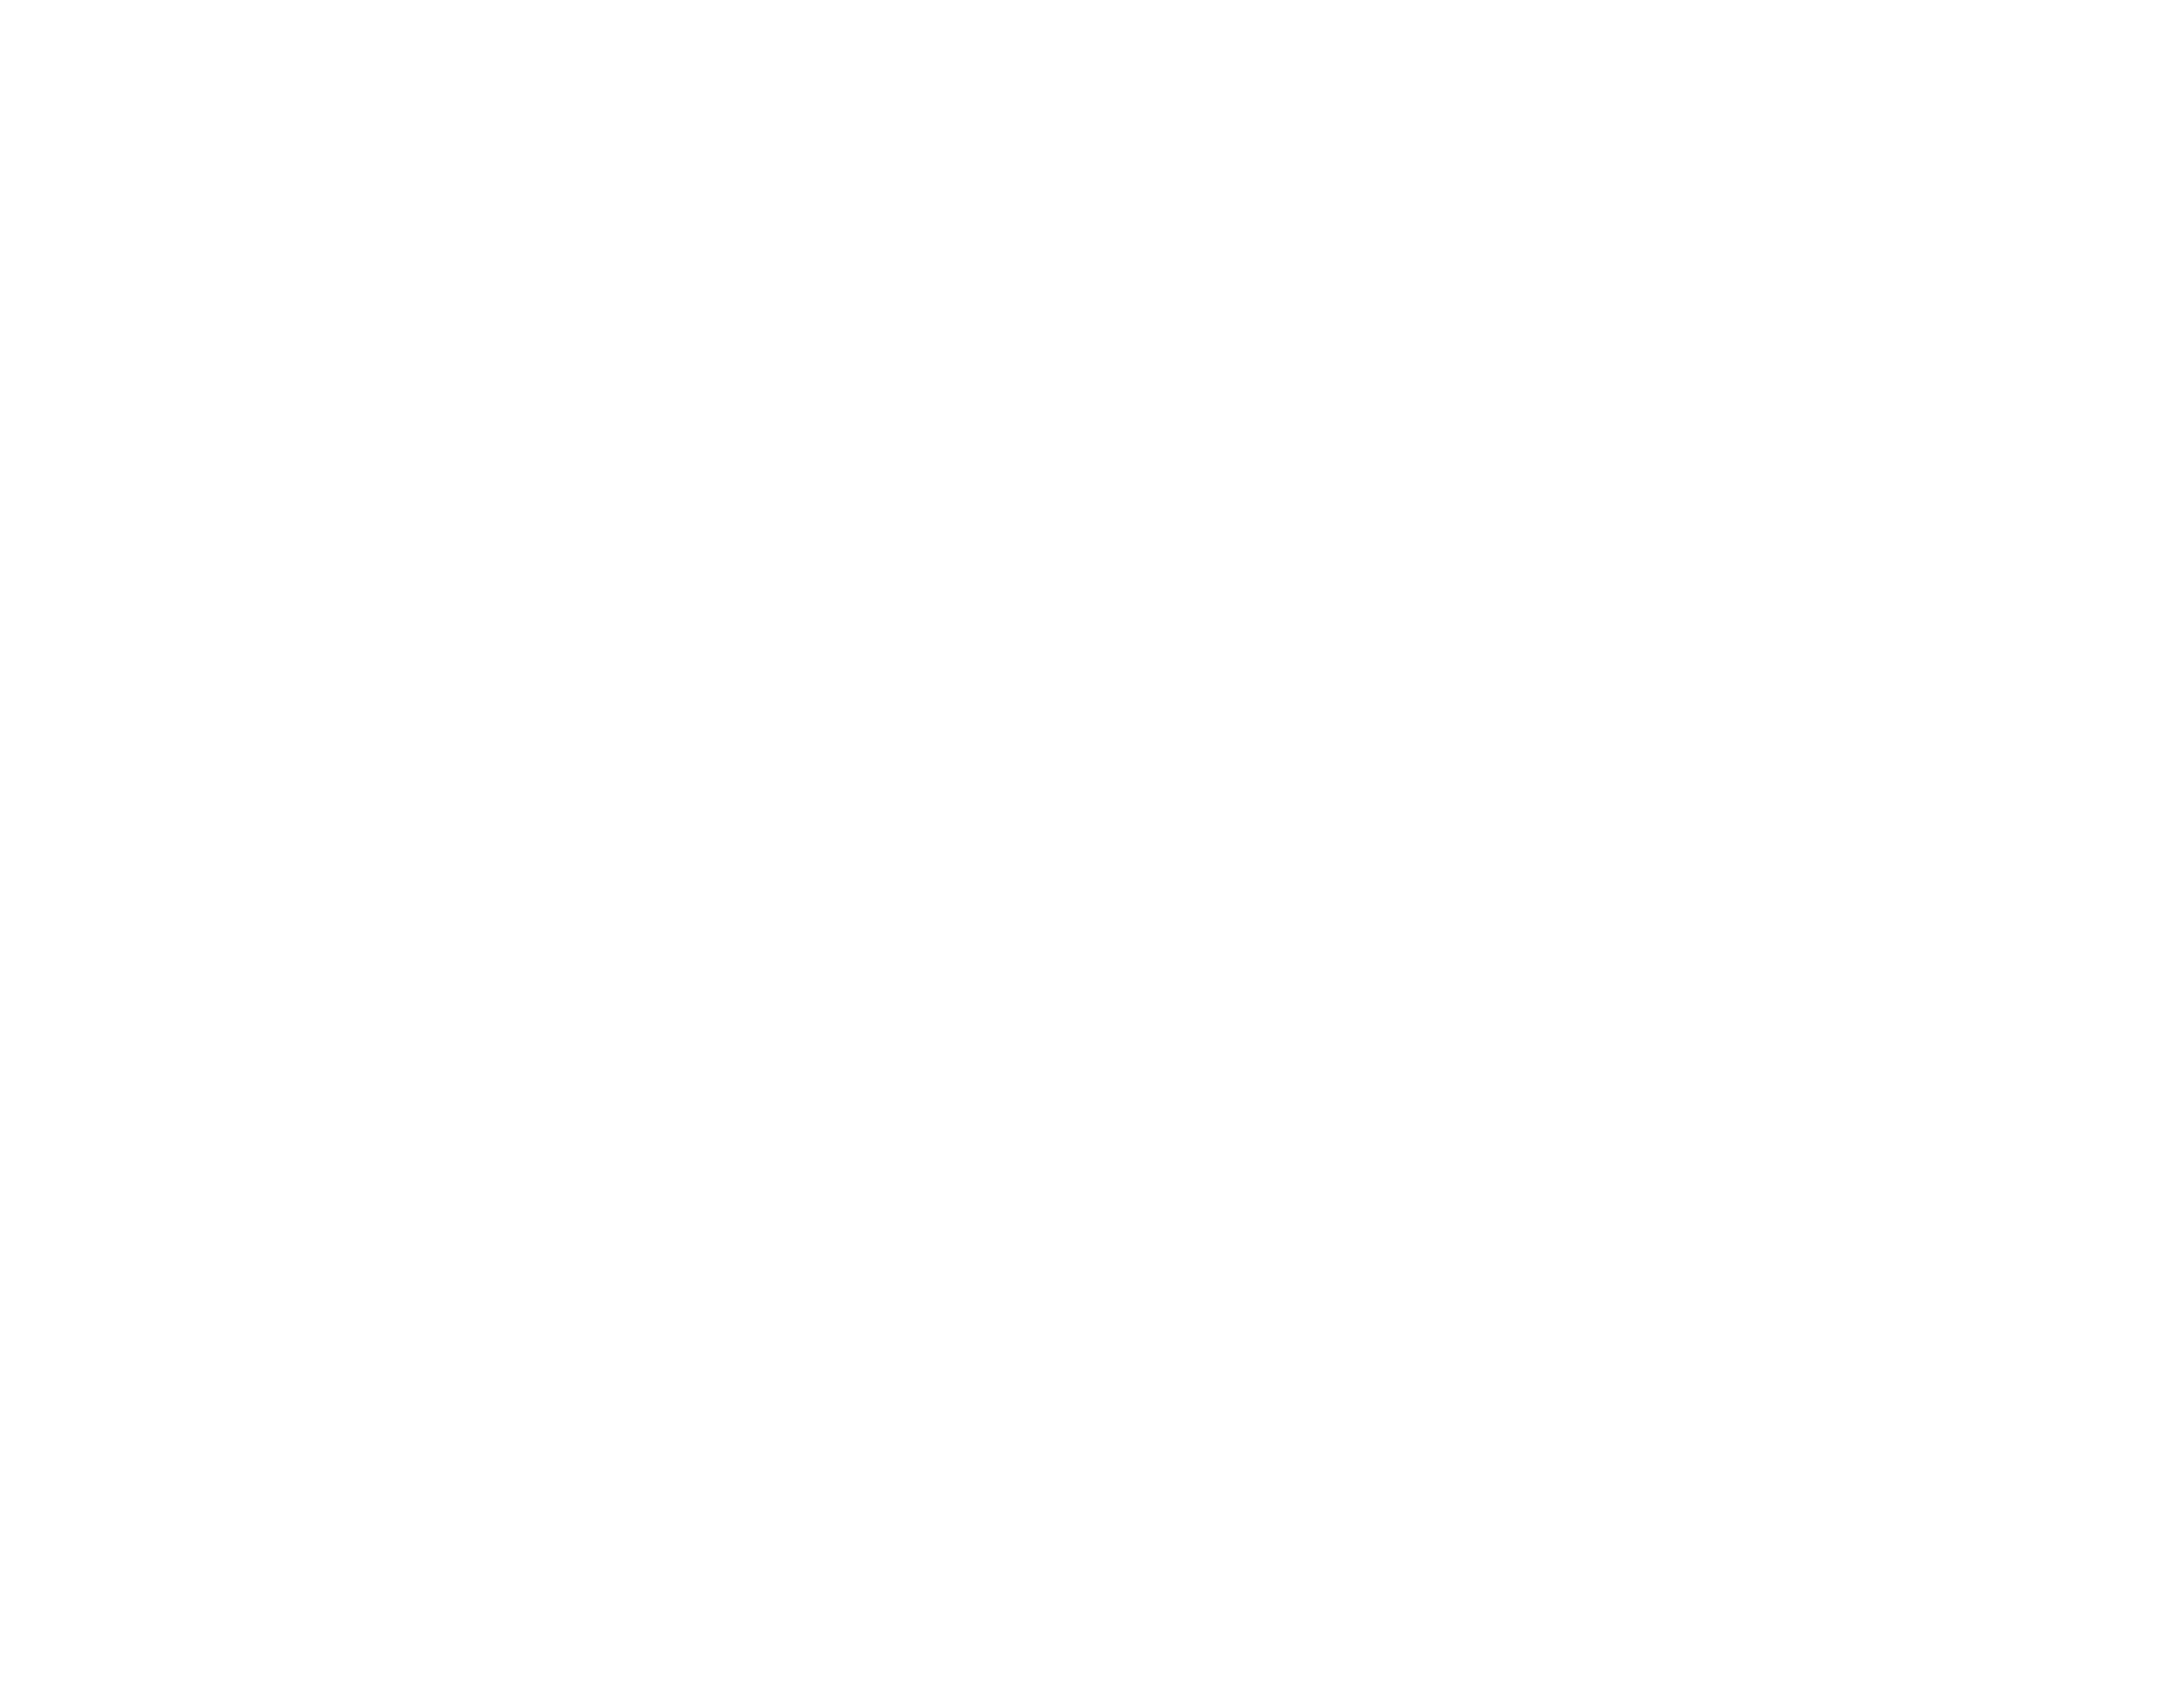 wphca logo Wisconsin Primary Health Care Association